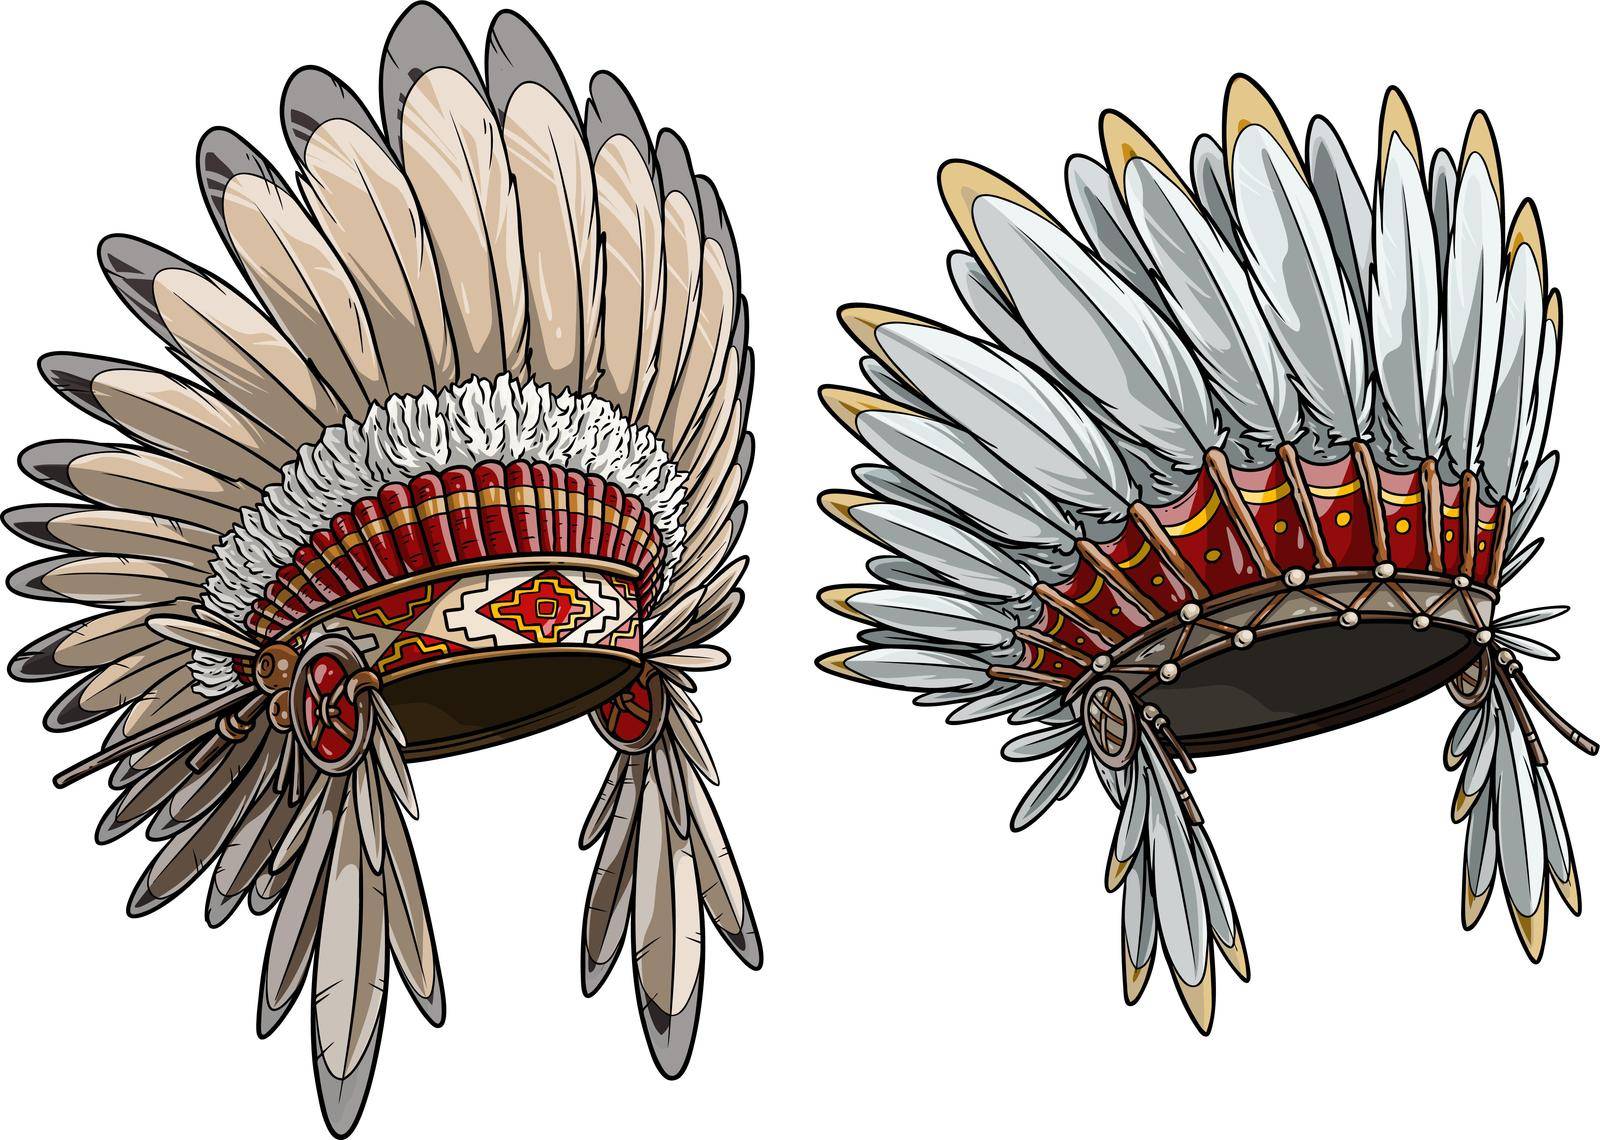 Cartoon native american indian chief headdress set by GB_Art